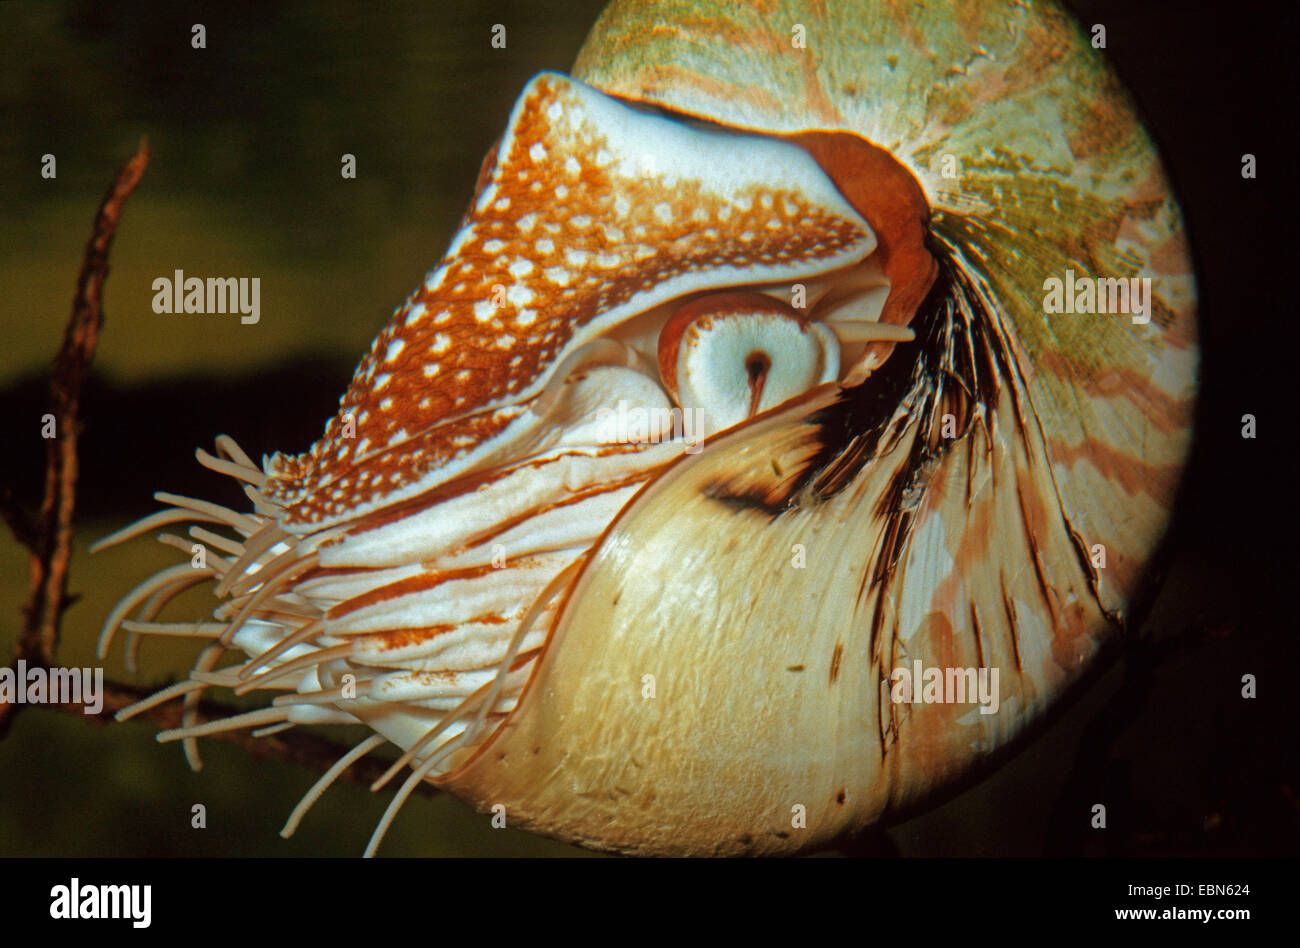 chambered nautilus, emperor nautilus (Nautilus pompilius), closeup of a swimming animal Stock Photo